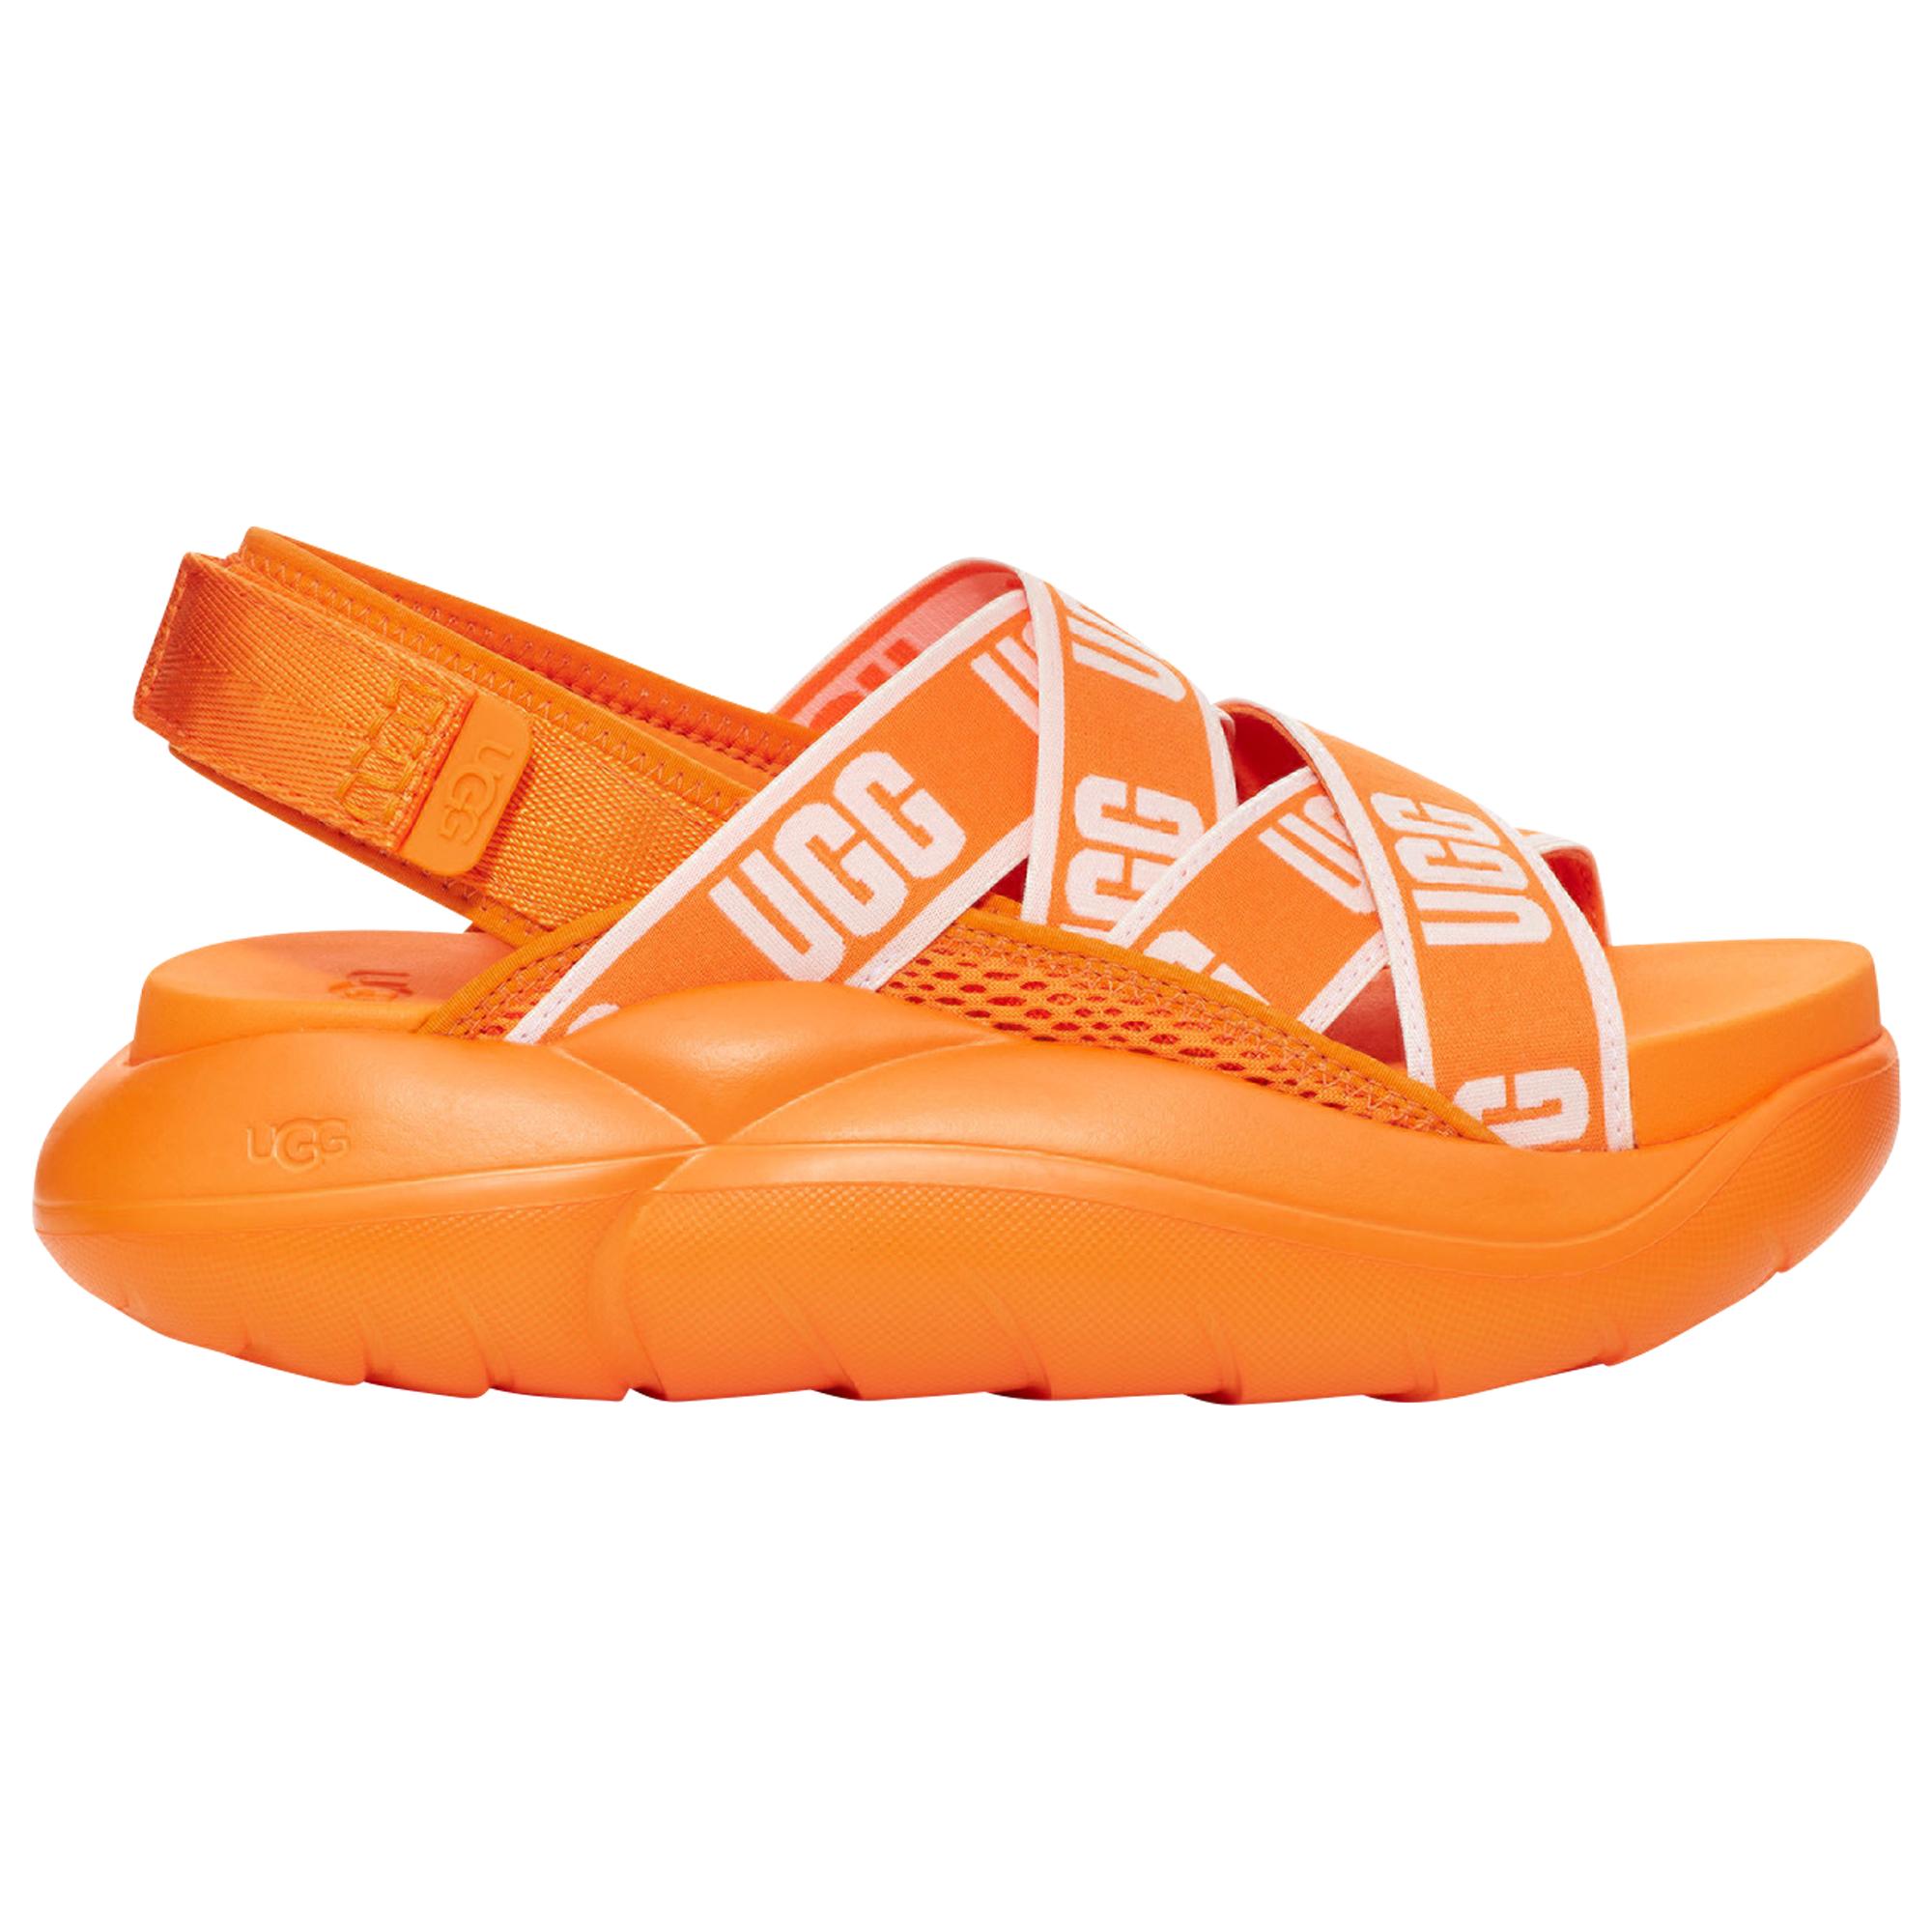 UGG Cloud Sandal in Orange/Orange (Orange) - Save 46% | Lyst